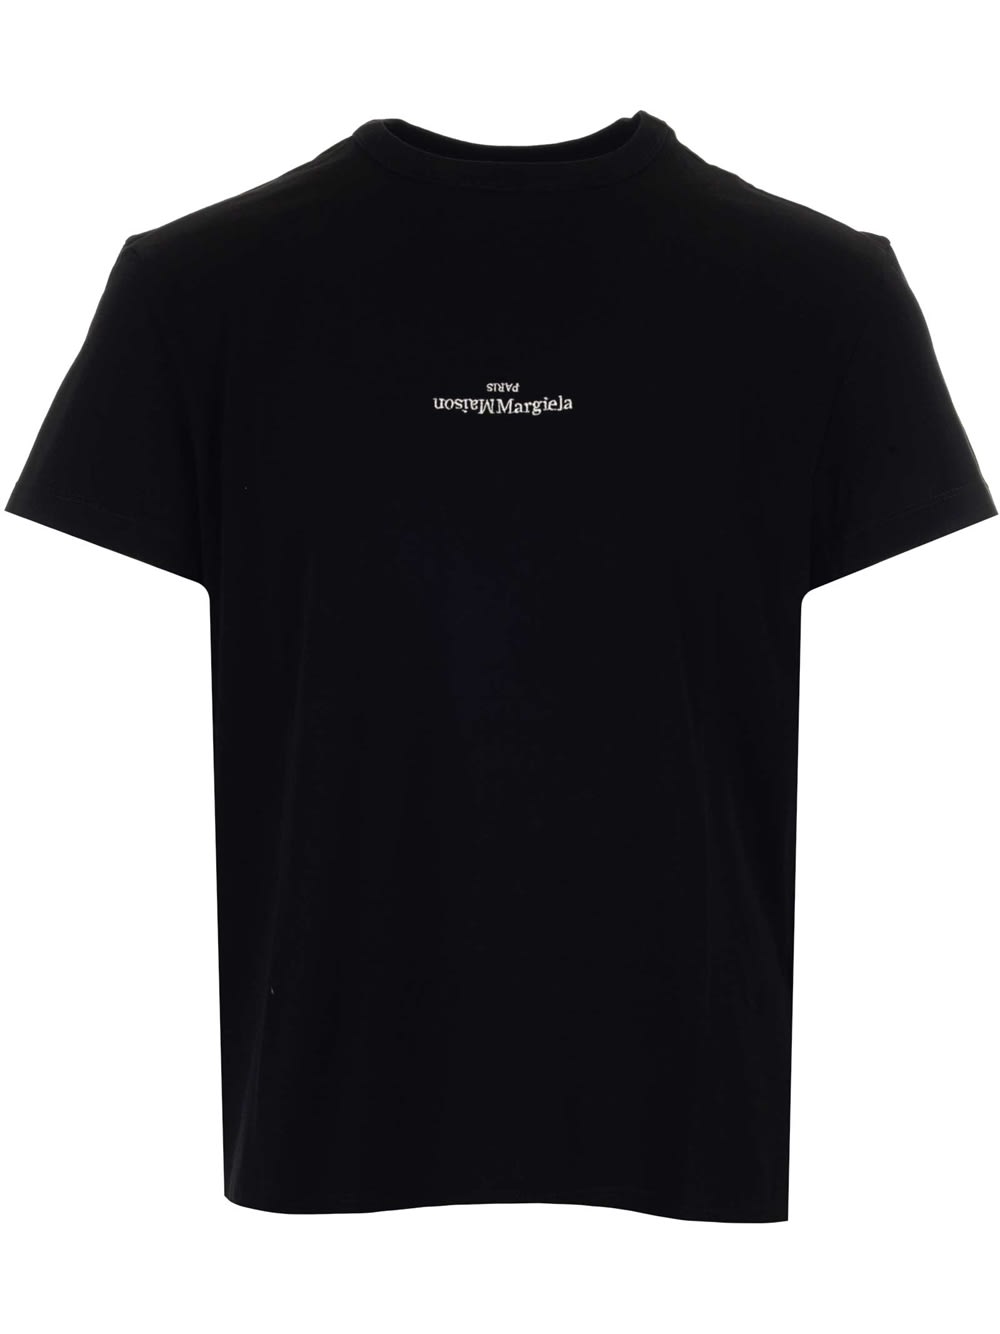 Maison Margiela Black T-shirt